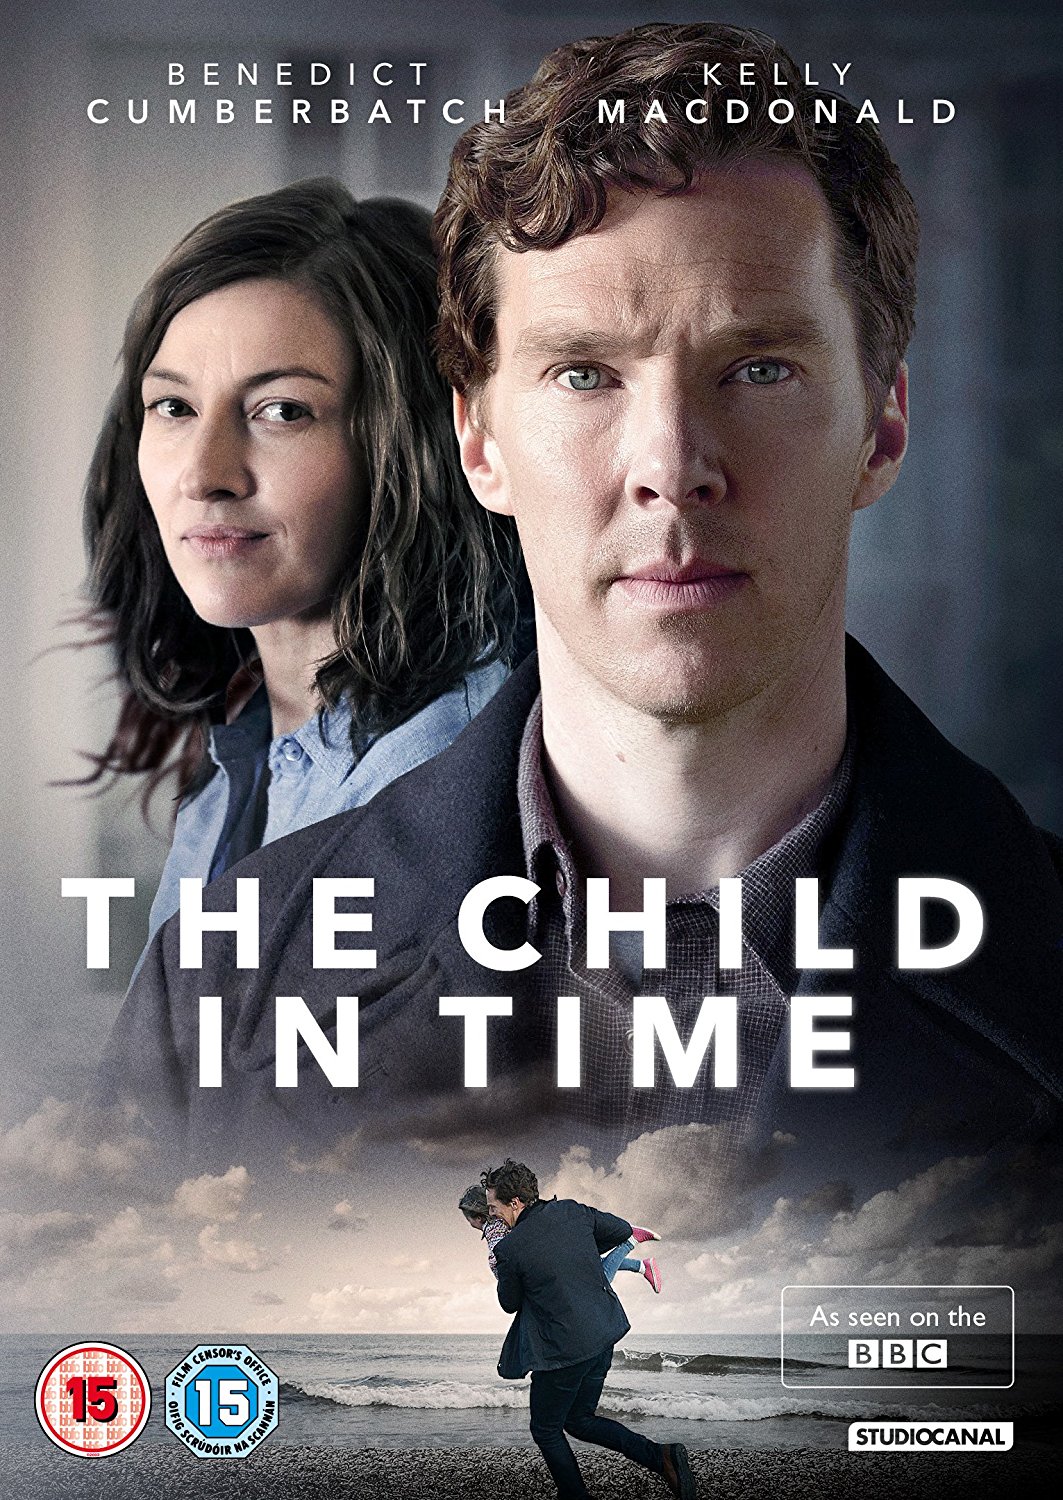 Nonton film The Child in Time layarkaca21 indoxx1 ganool online streaming terbaru